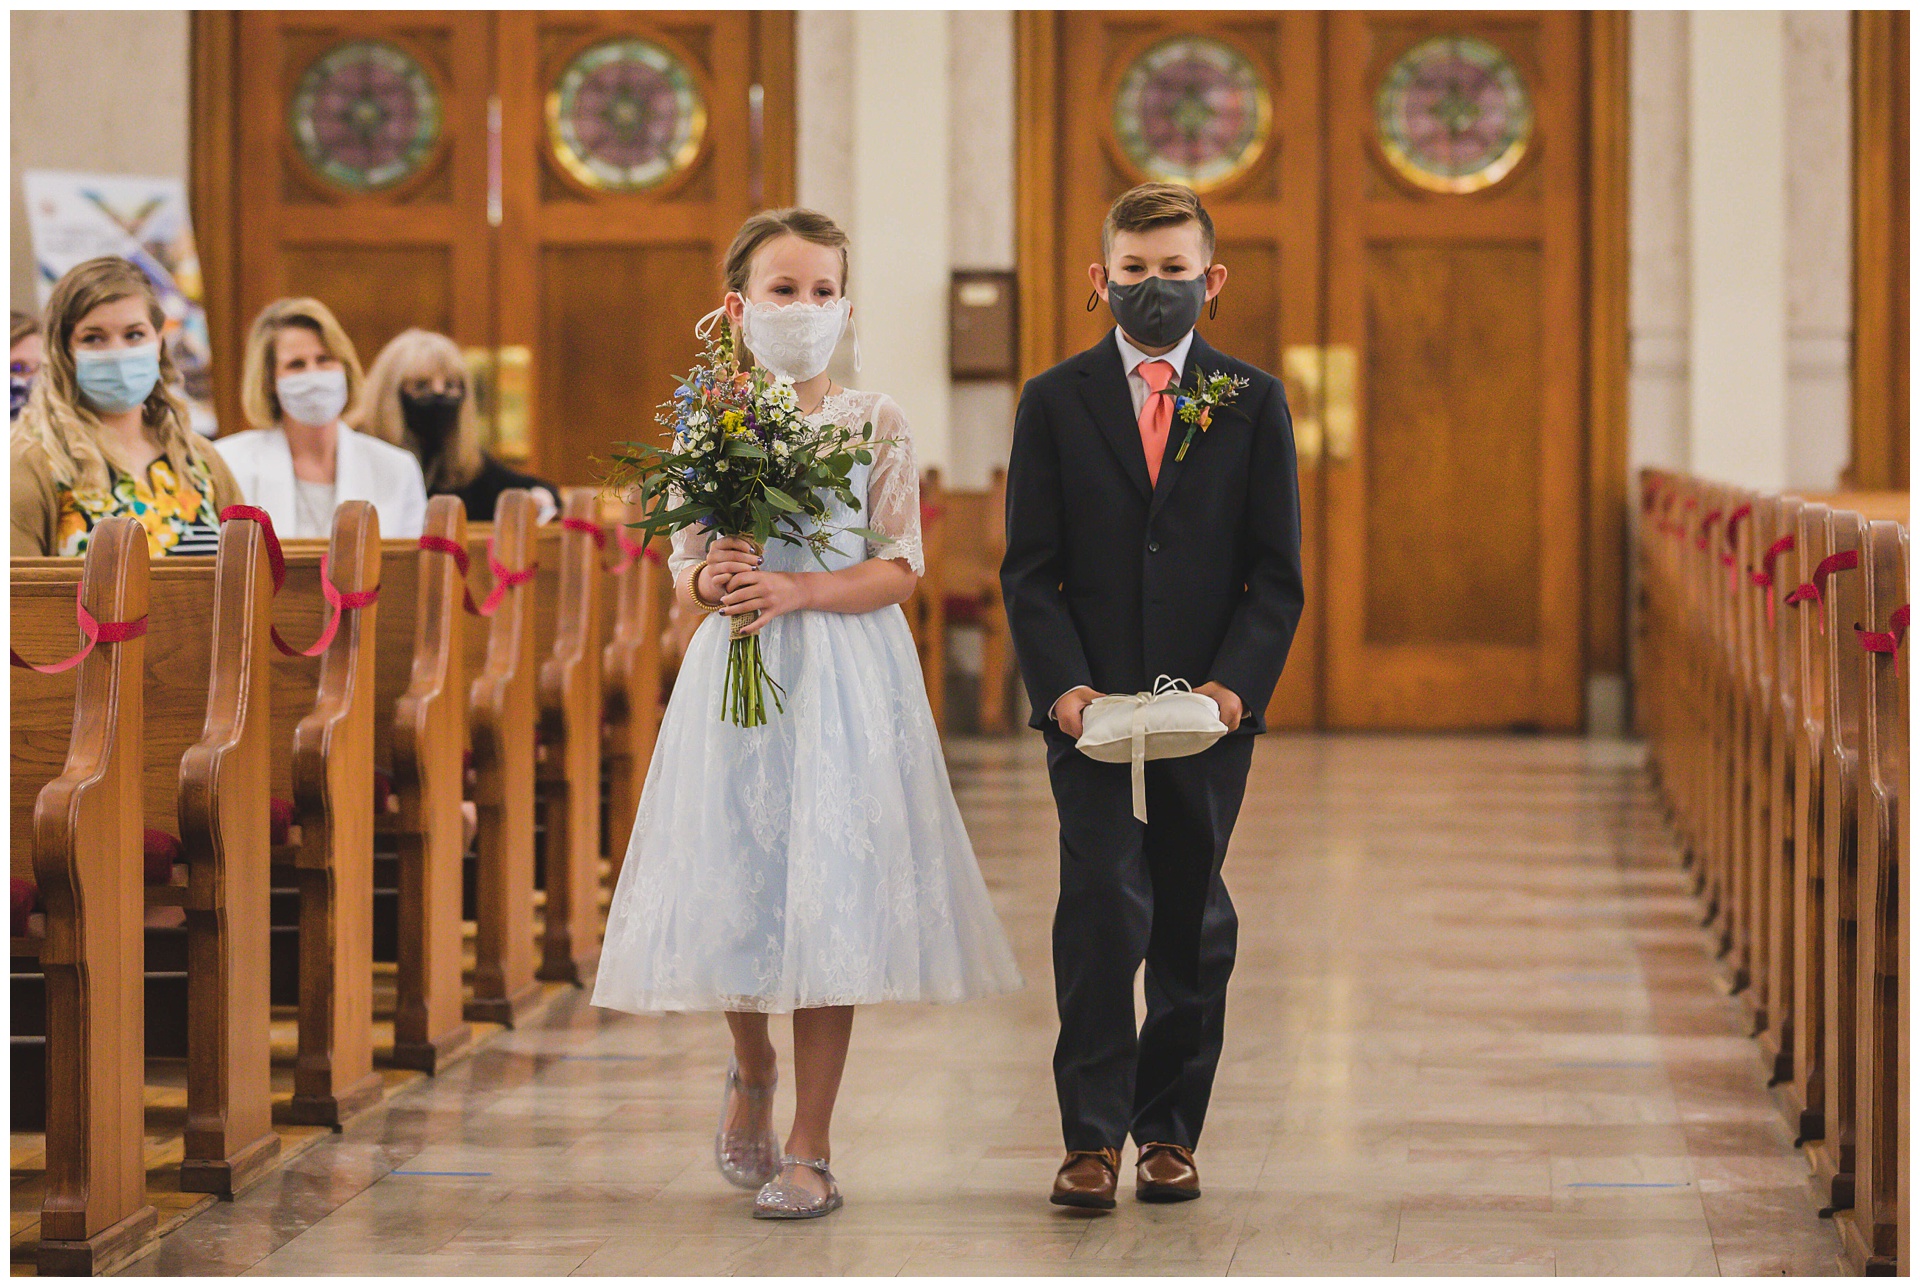 Wedding photography at Our Lady of Sorrows Catholic Church by Kansas City wedding photographers Wisdom-Watson Weddings.